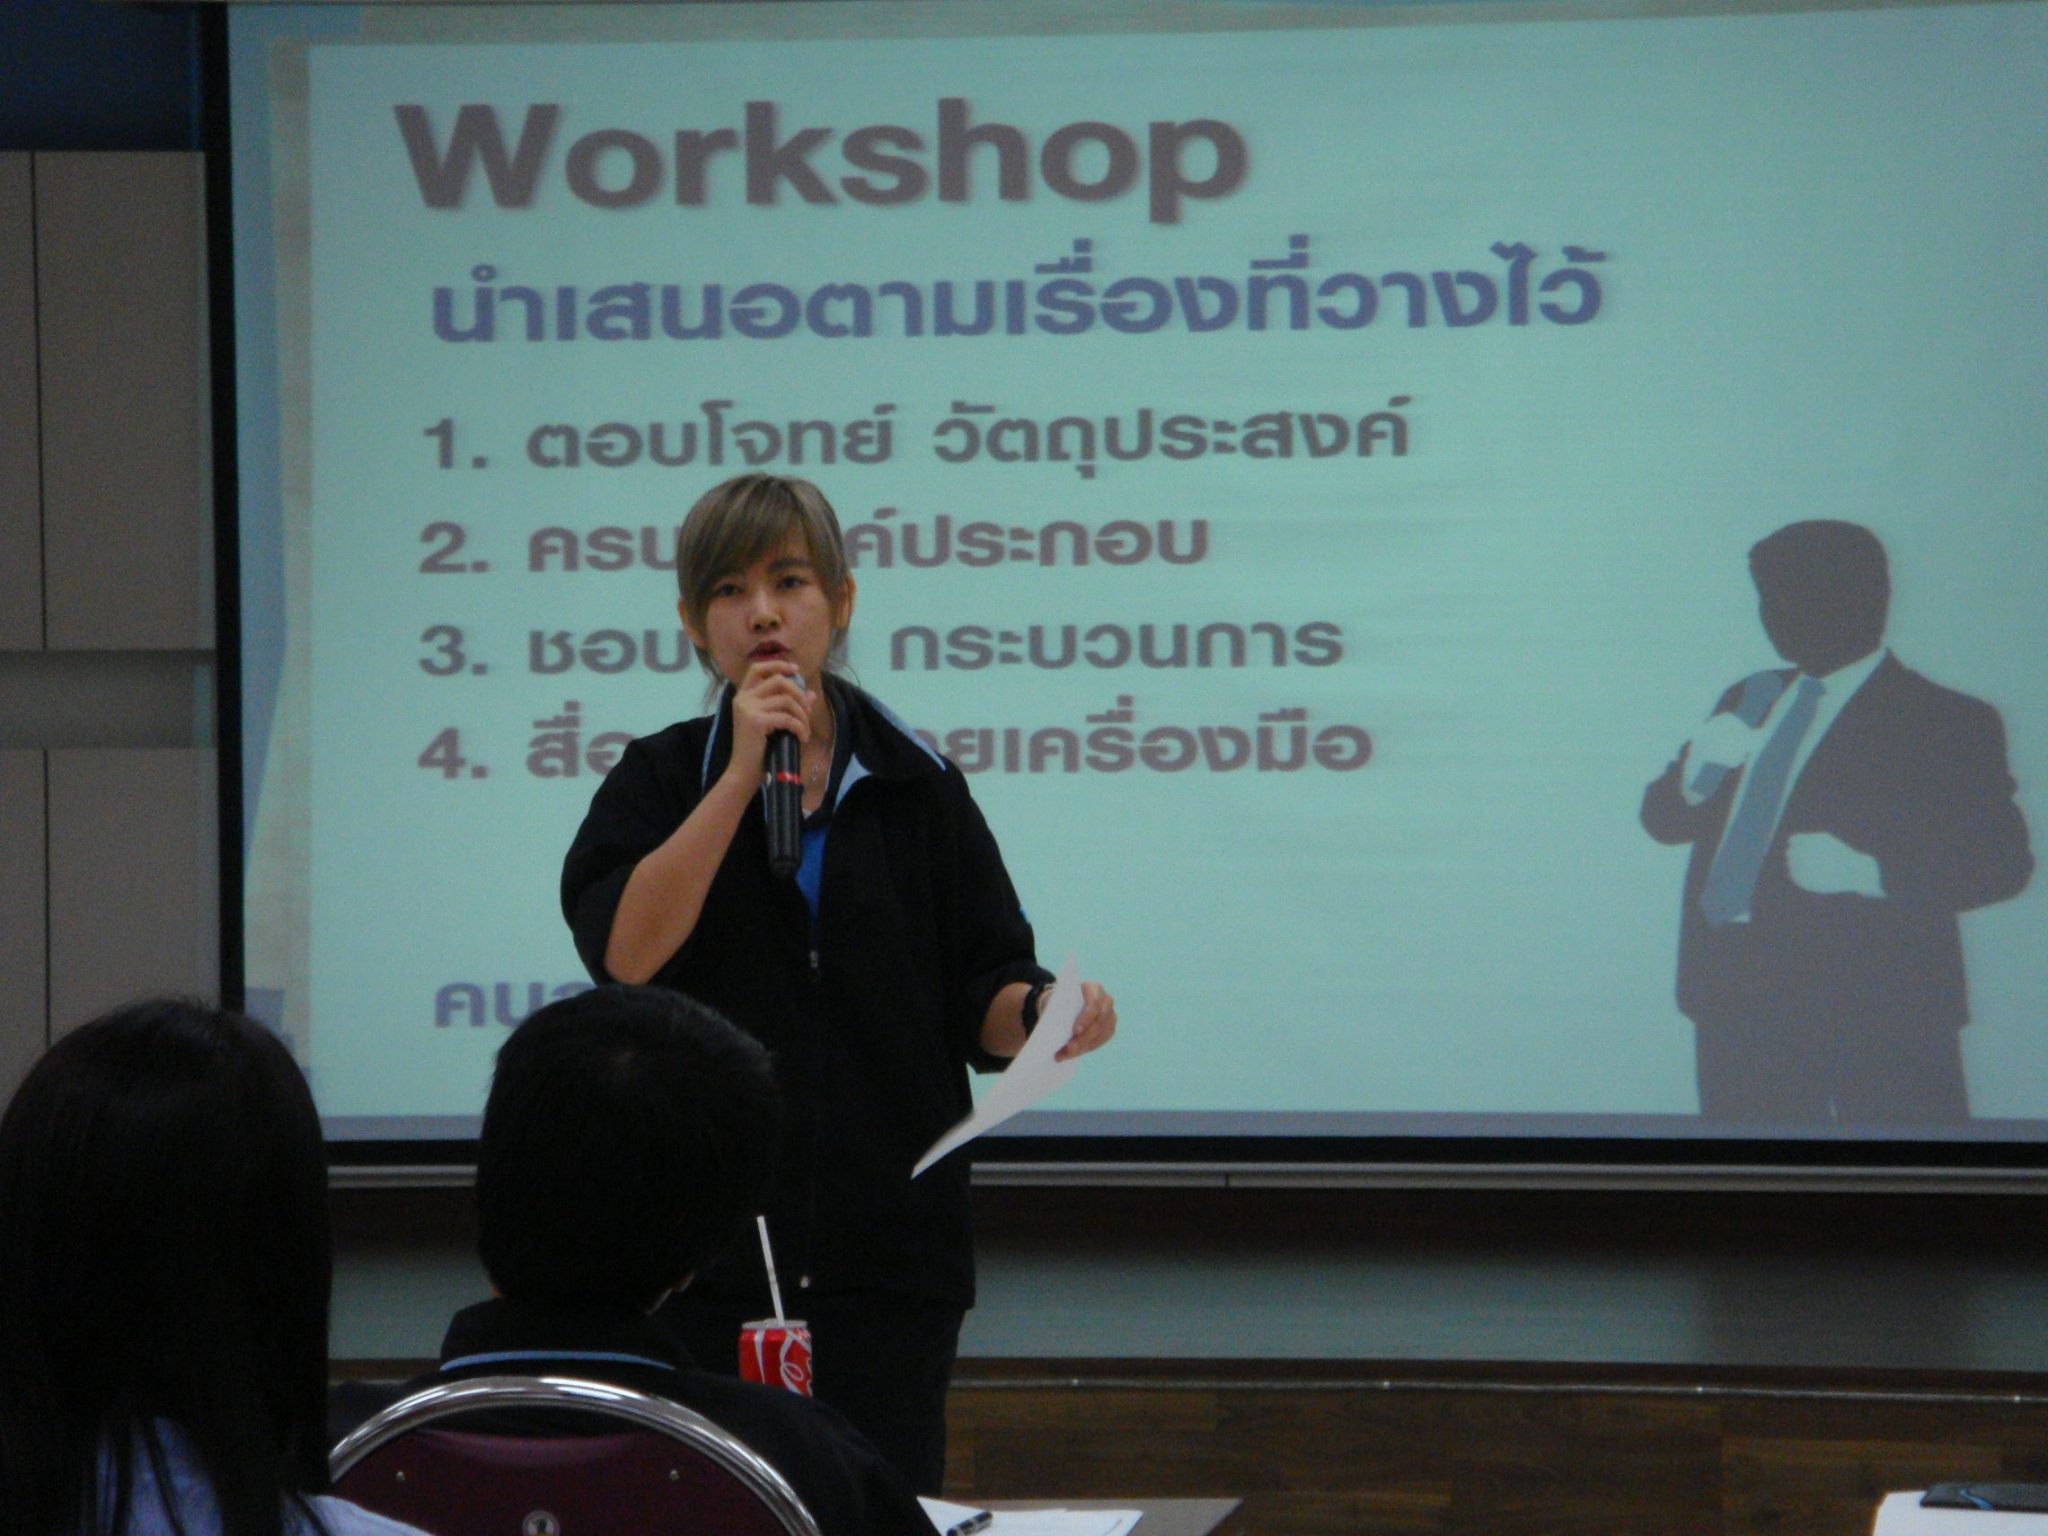 Tsubakimoto Automotive (Thailand) : Public Speaking